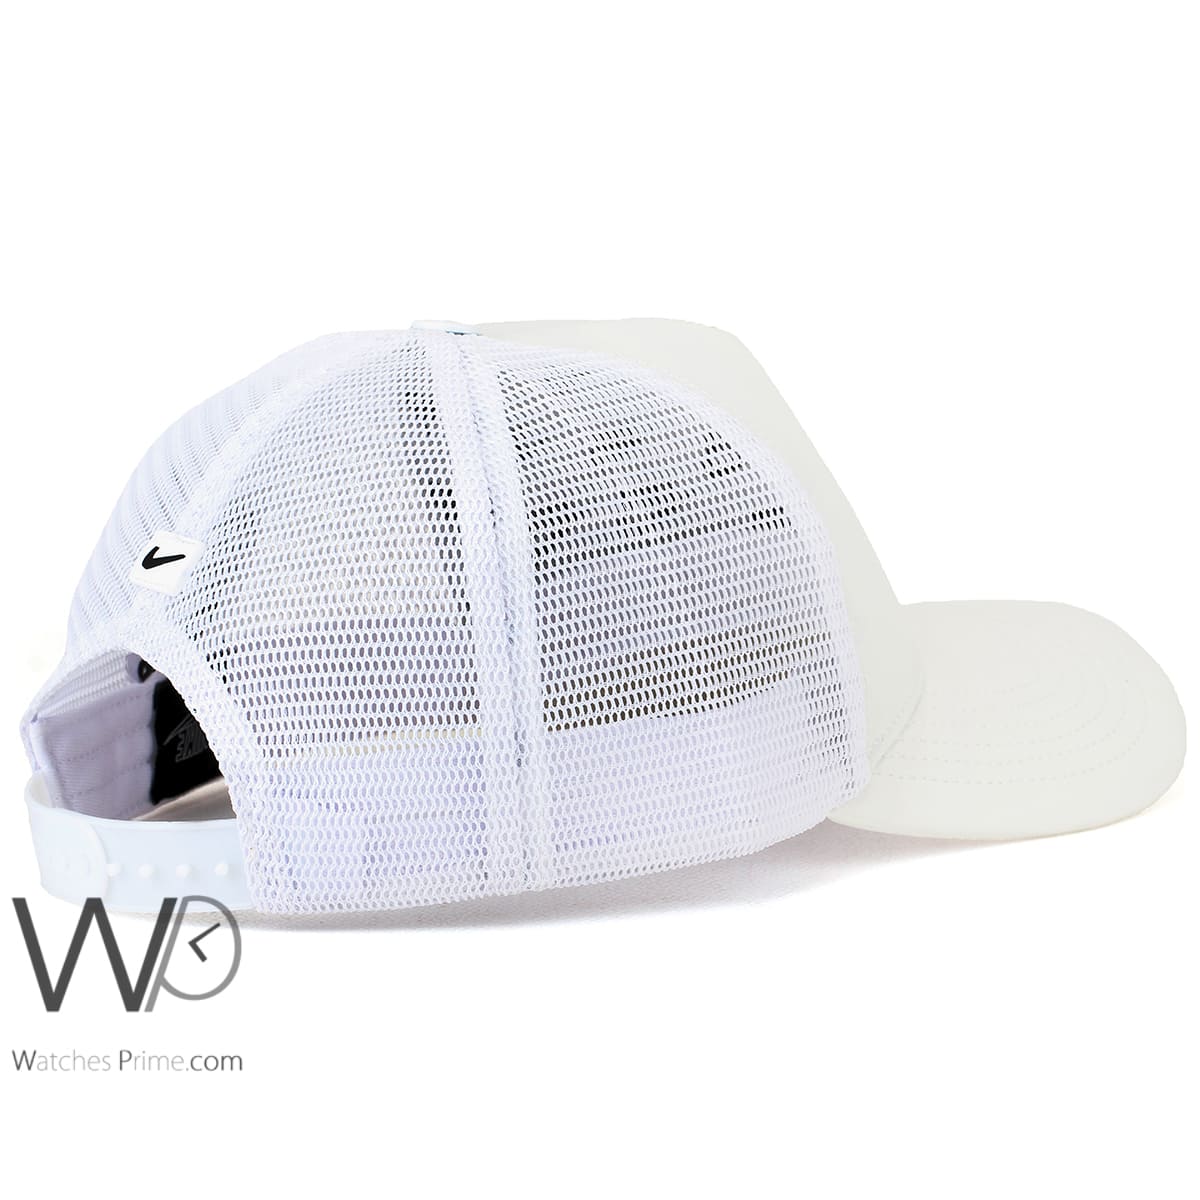 Nike SB White Mesh hat | Watches Prime